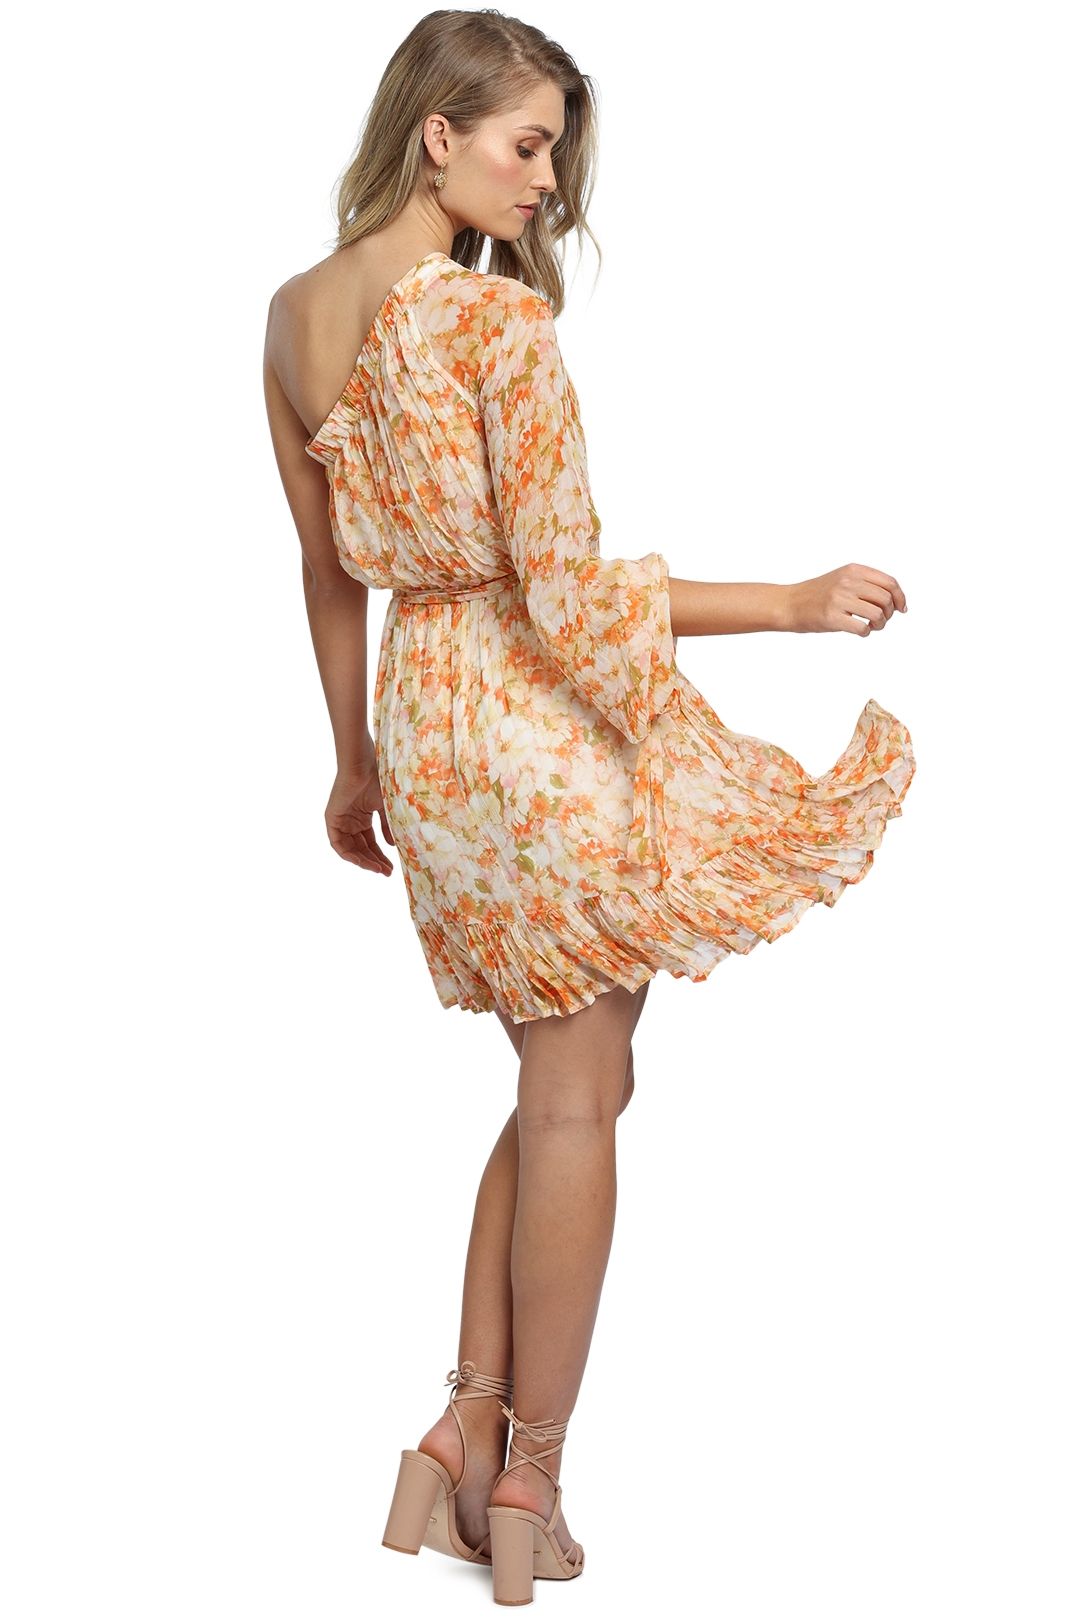 Ministry of Style Spring Meadows Mini Dress orange